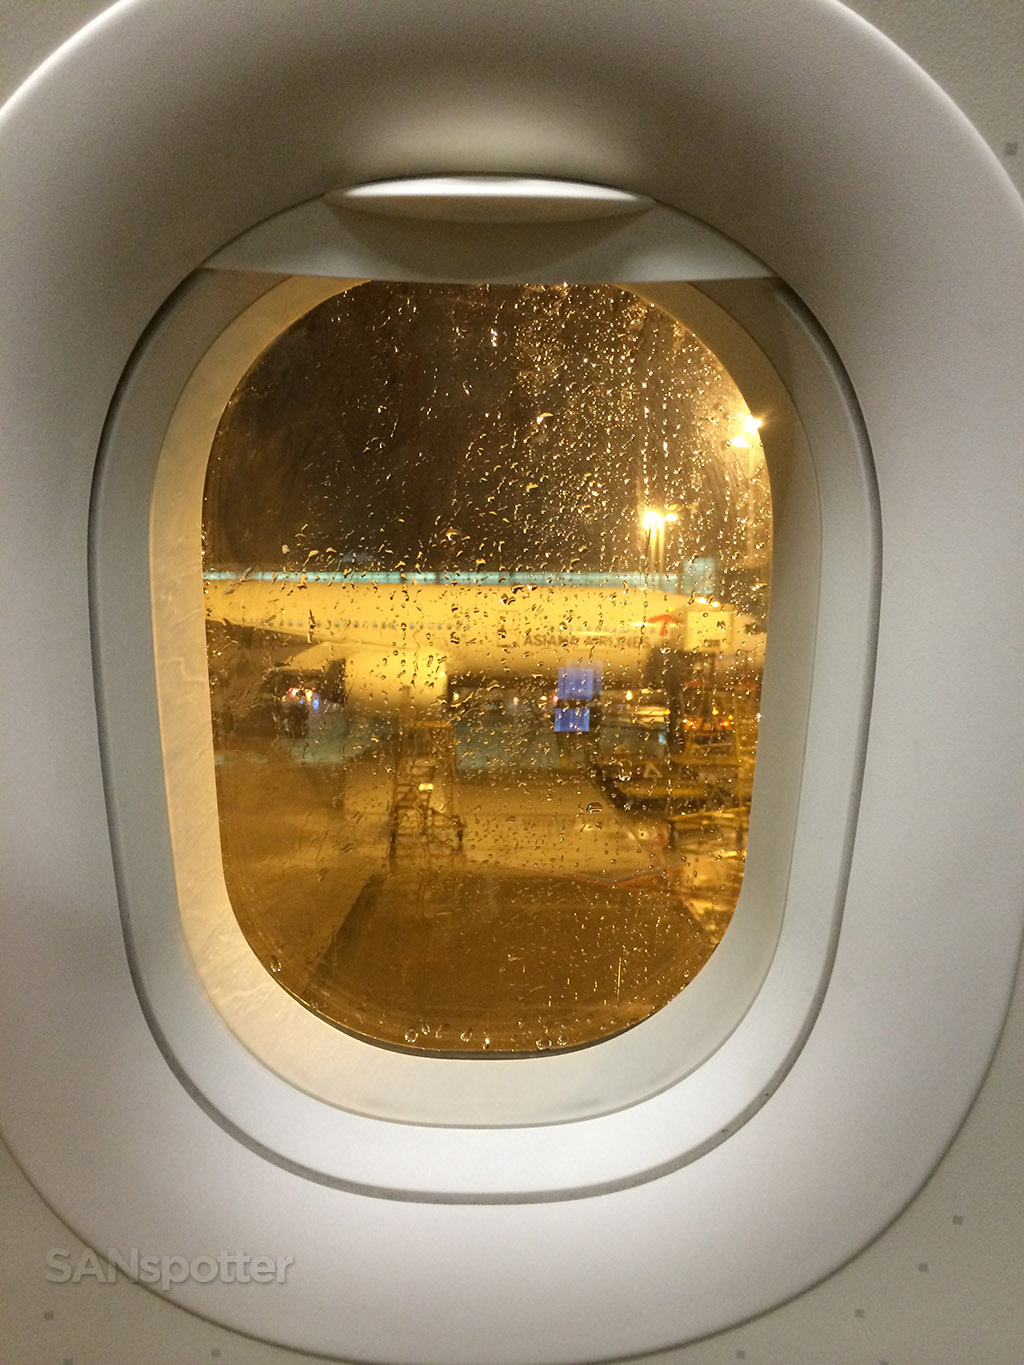 rain coming down at Incheon airport